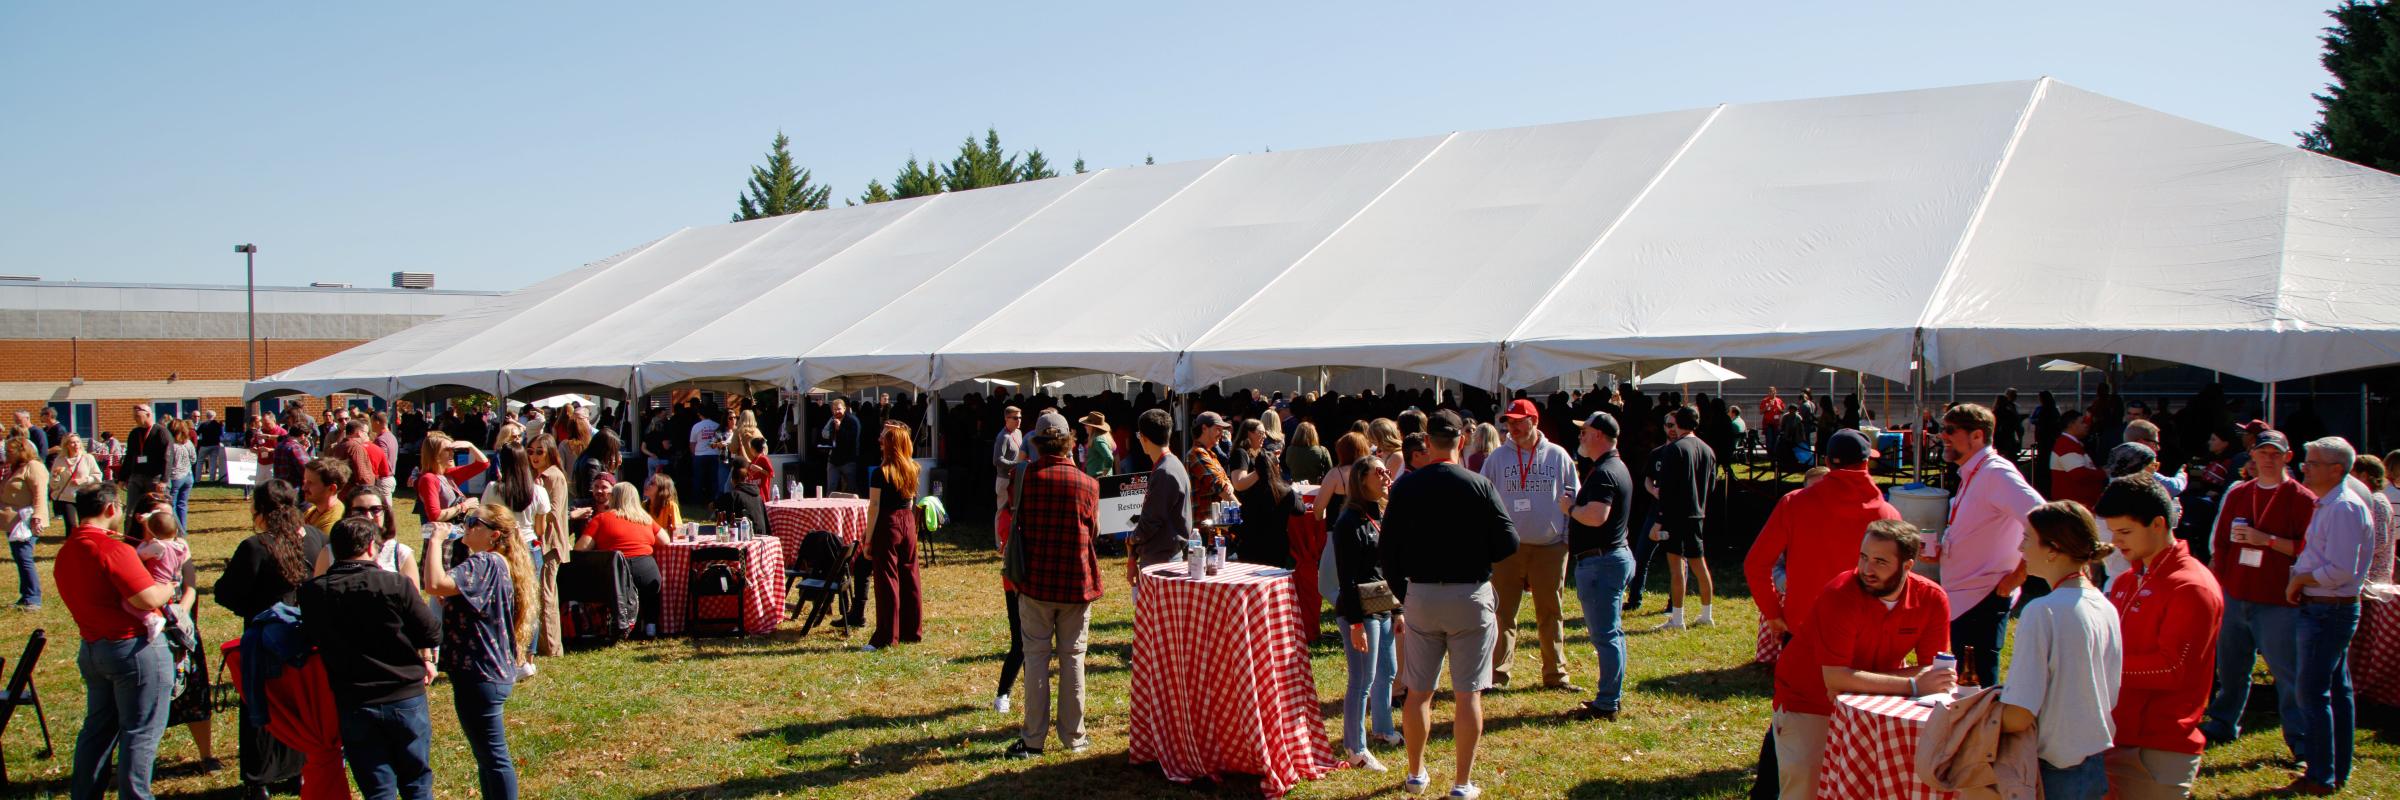 Alumni at Cardinal Weekend Tent Party